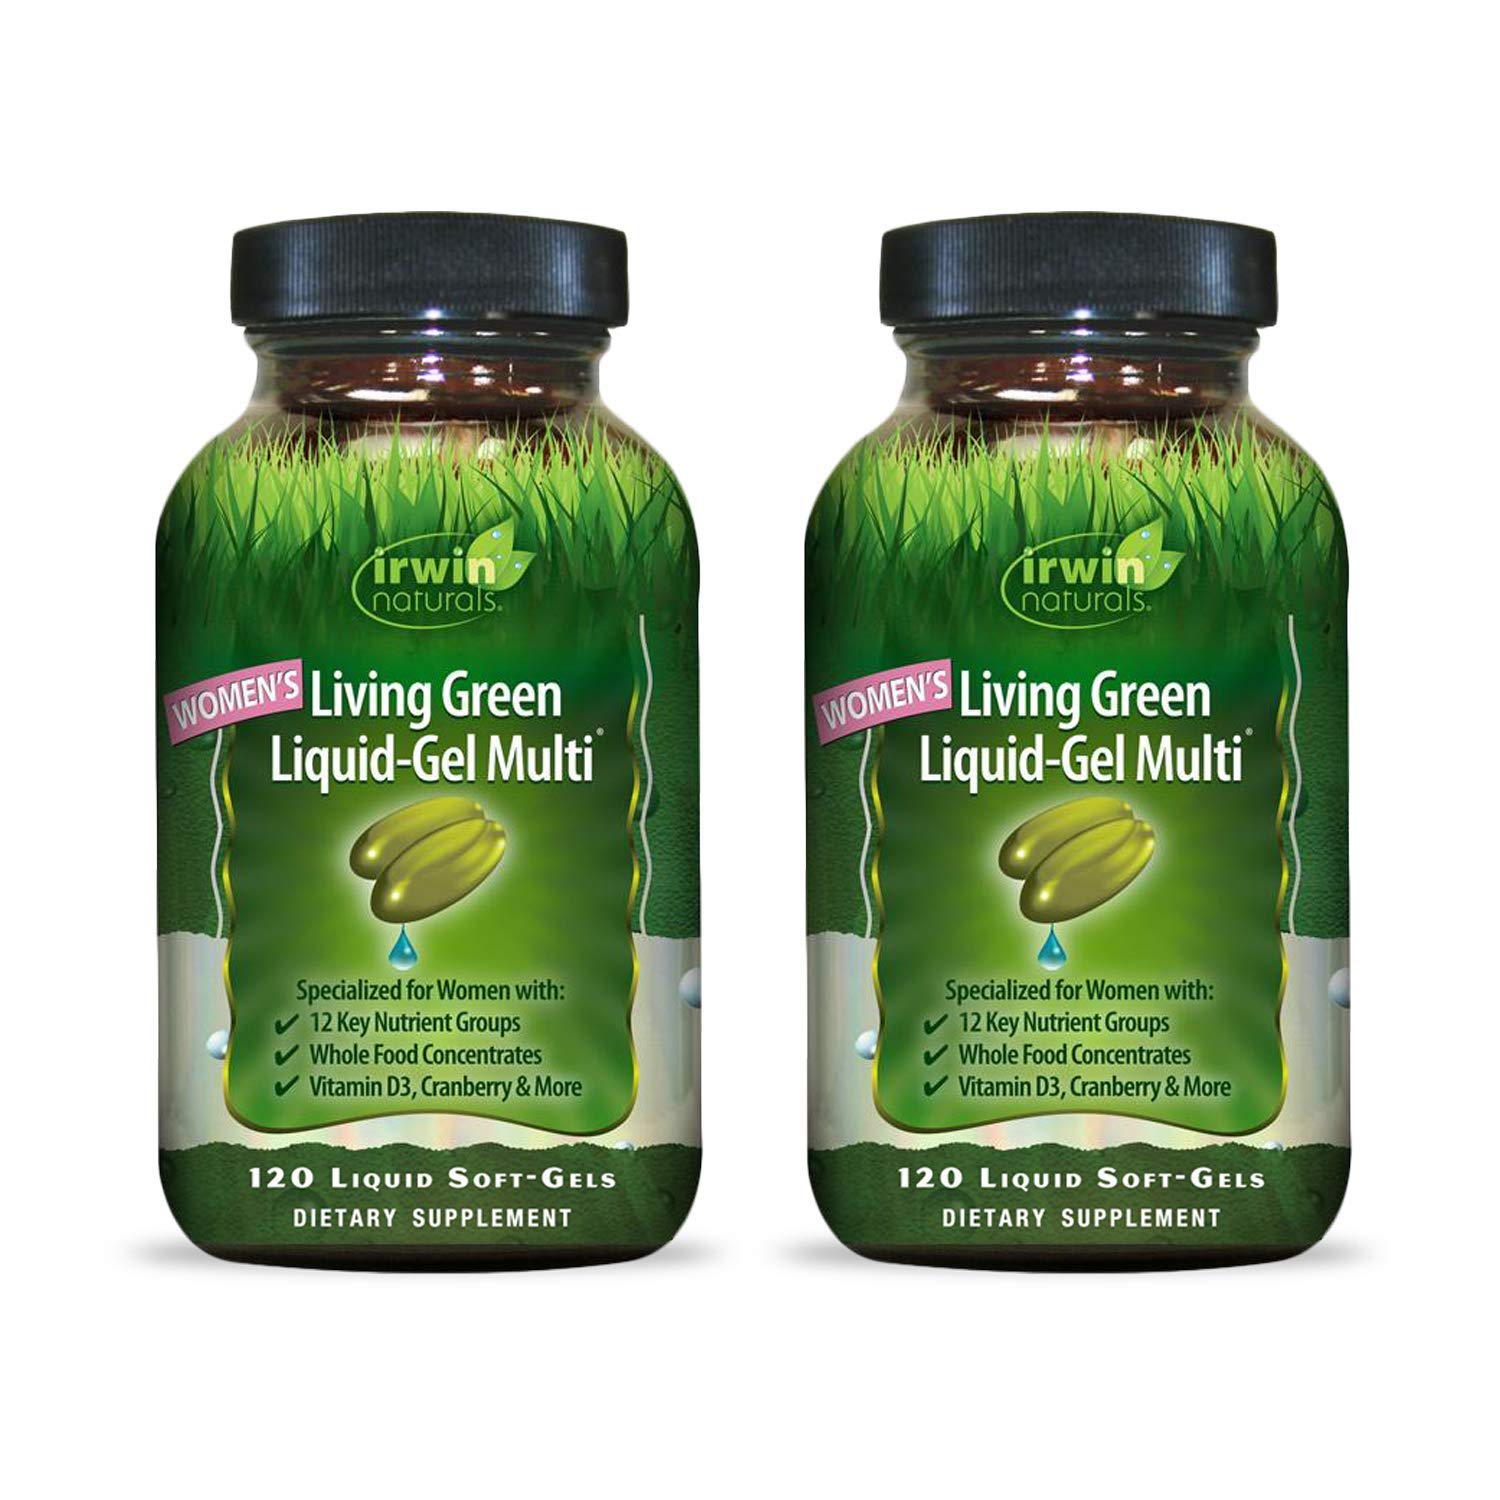 Irwin Naturals Women's Living Green Liquid-Gel Multi Vitamin - 70 Essential Nutrients, Full-Spectrum Vitamins, Wholefood Blend - Targeted Adrenal & Brain Support - 120 Liquid Softgels